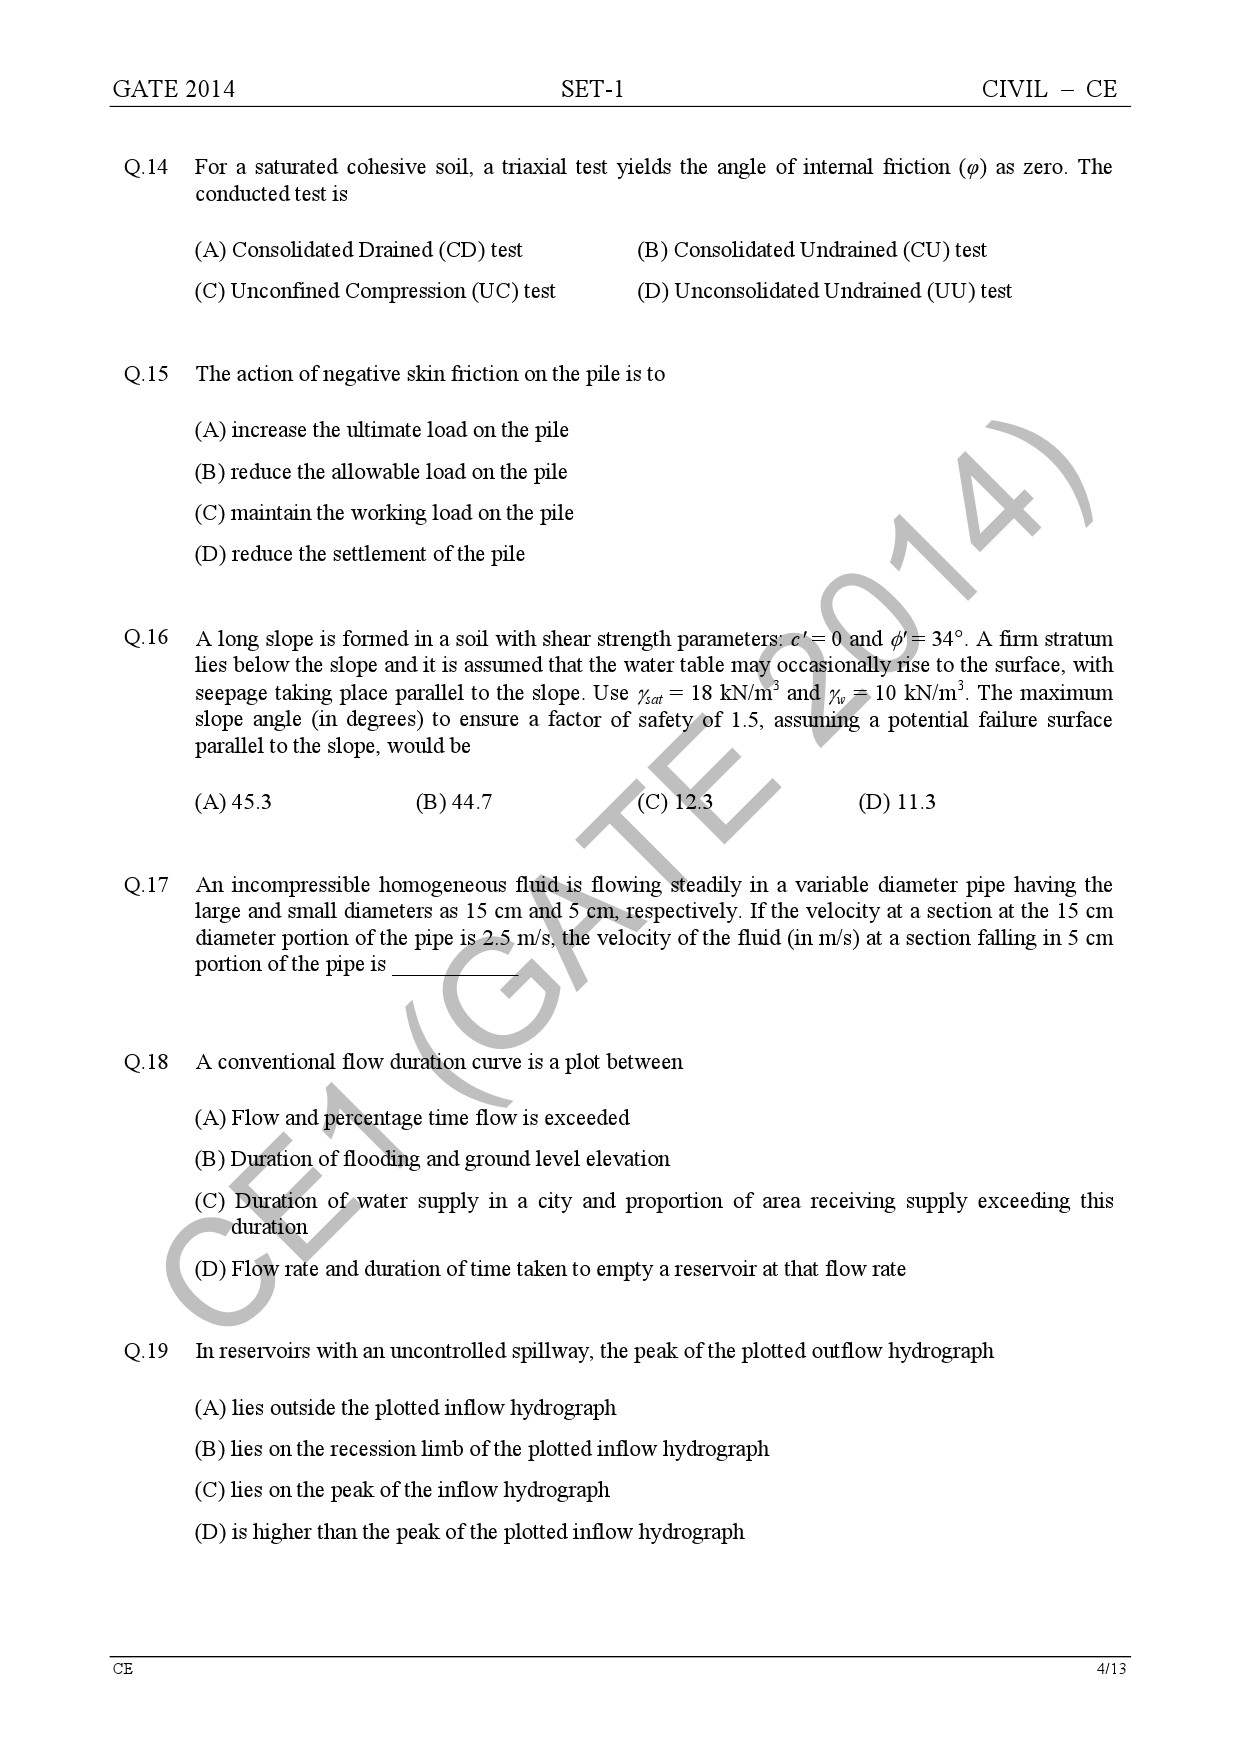 GATE Exam Question Paper 2014 Civil Engineering Set 1 10